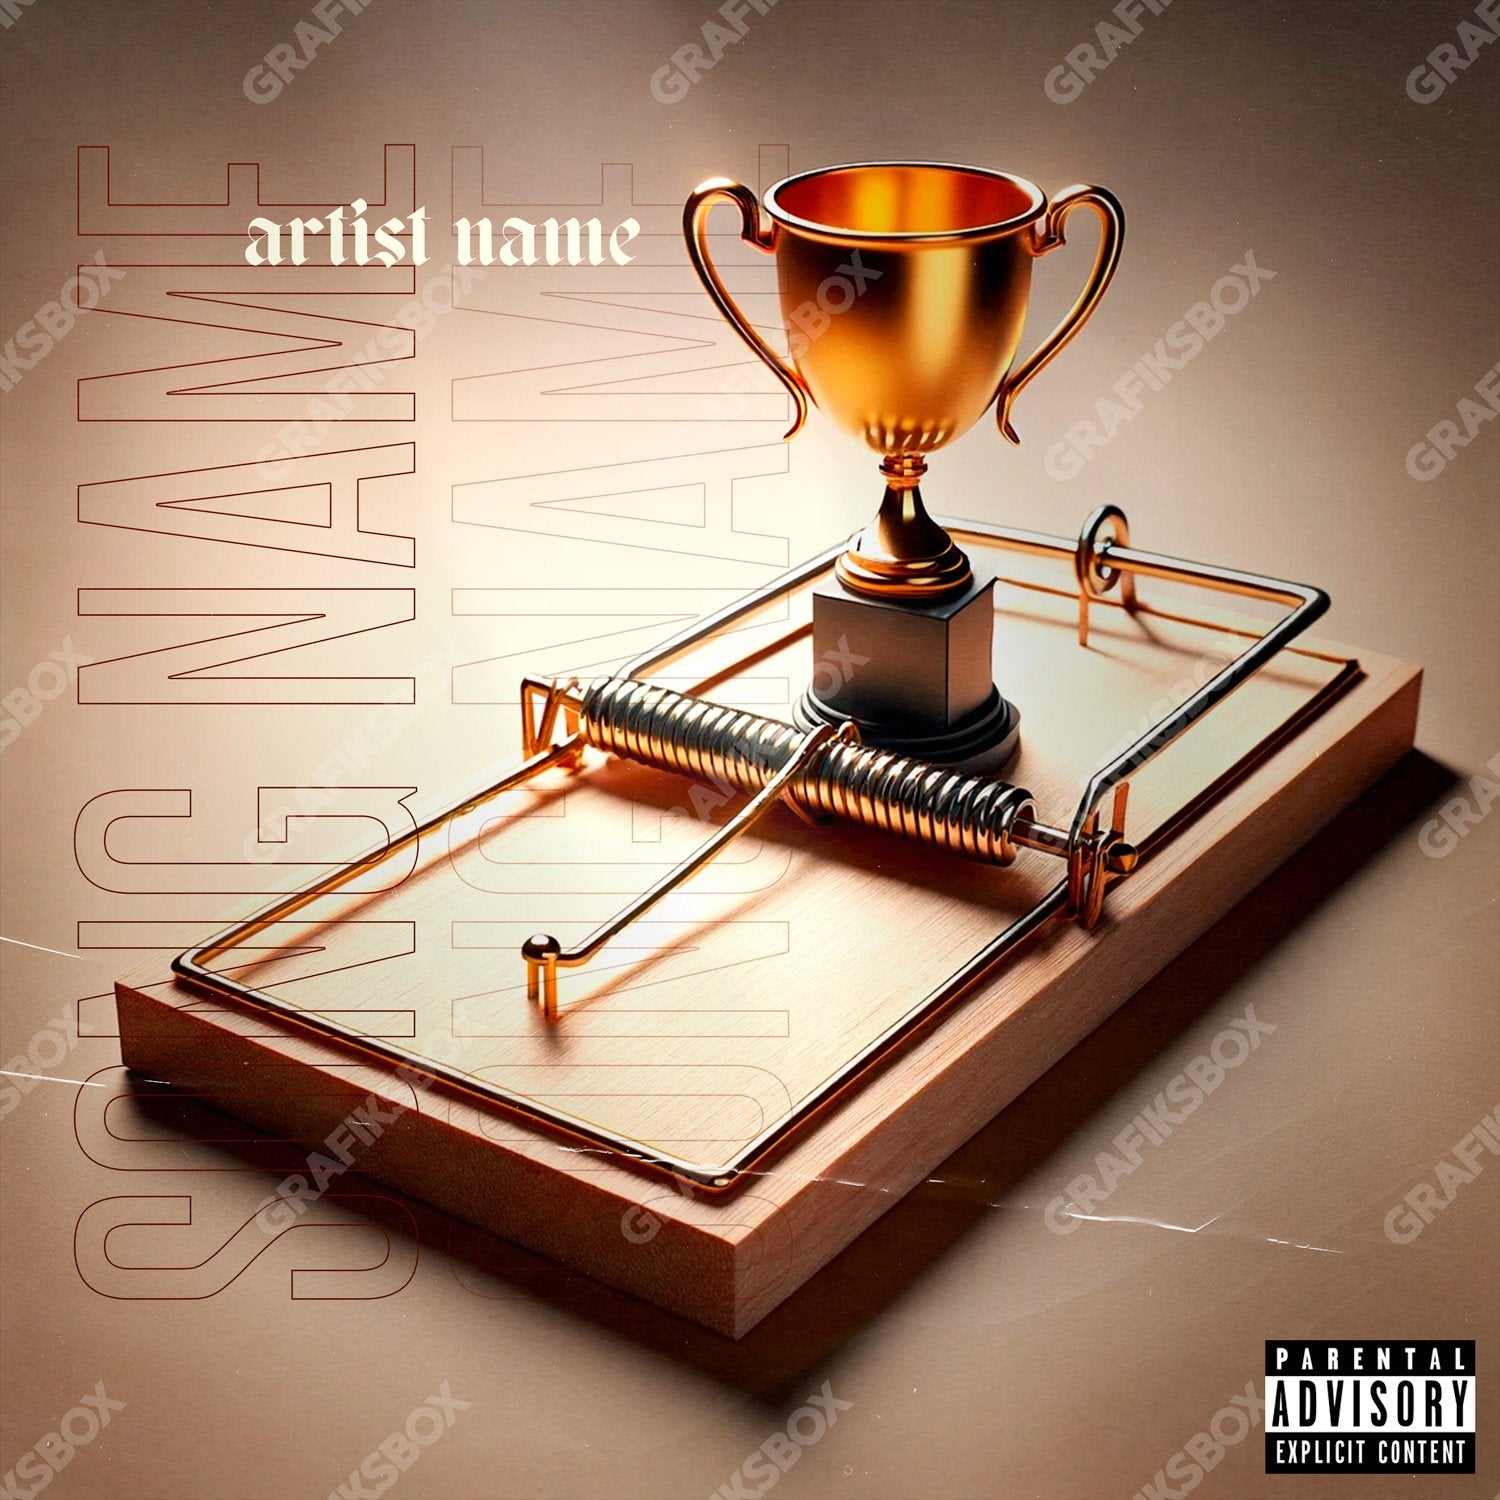 Trap Award premade cover art